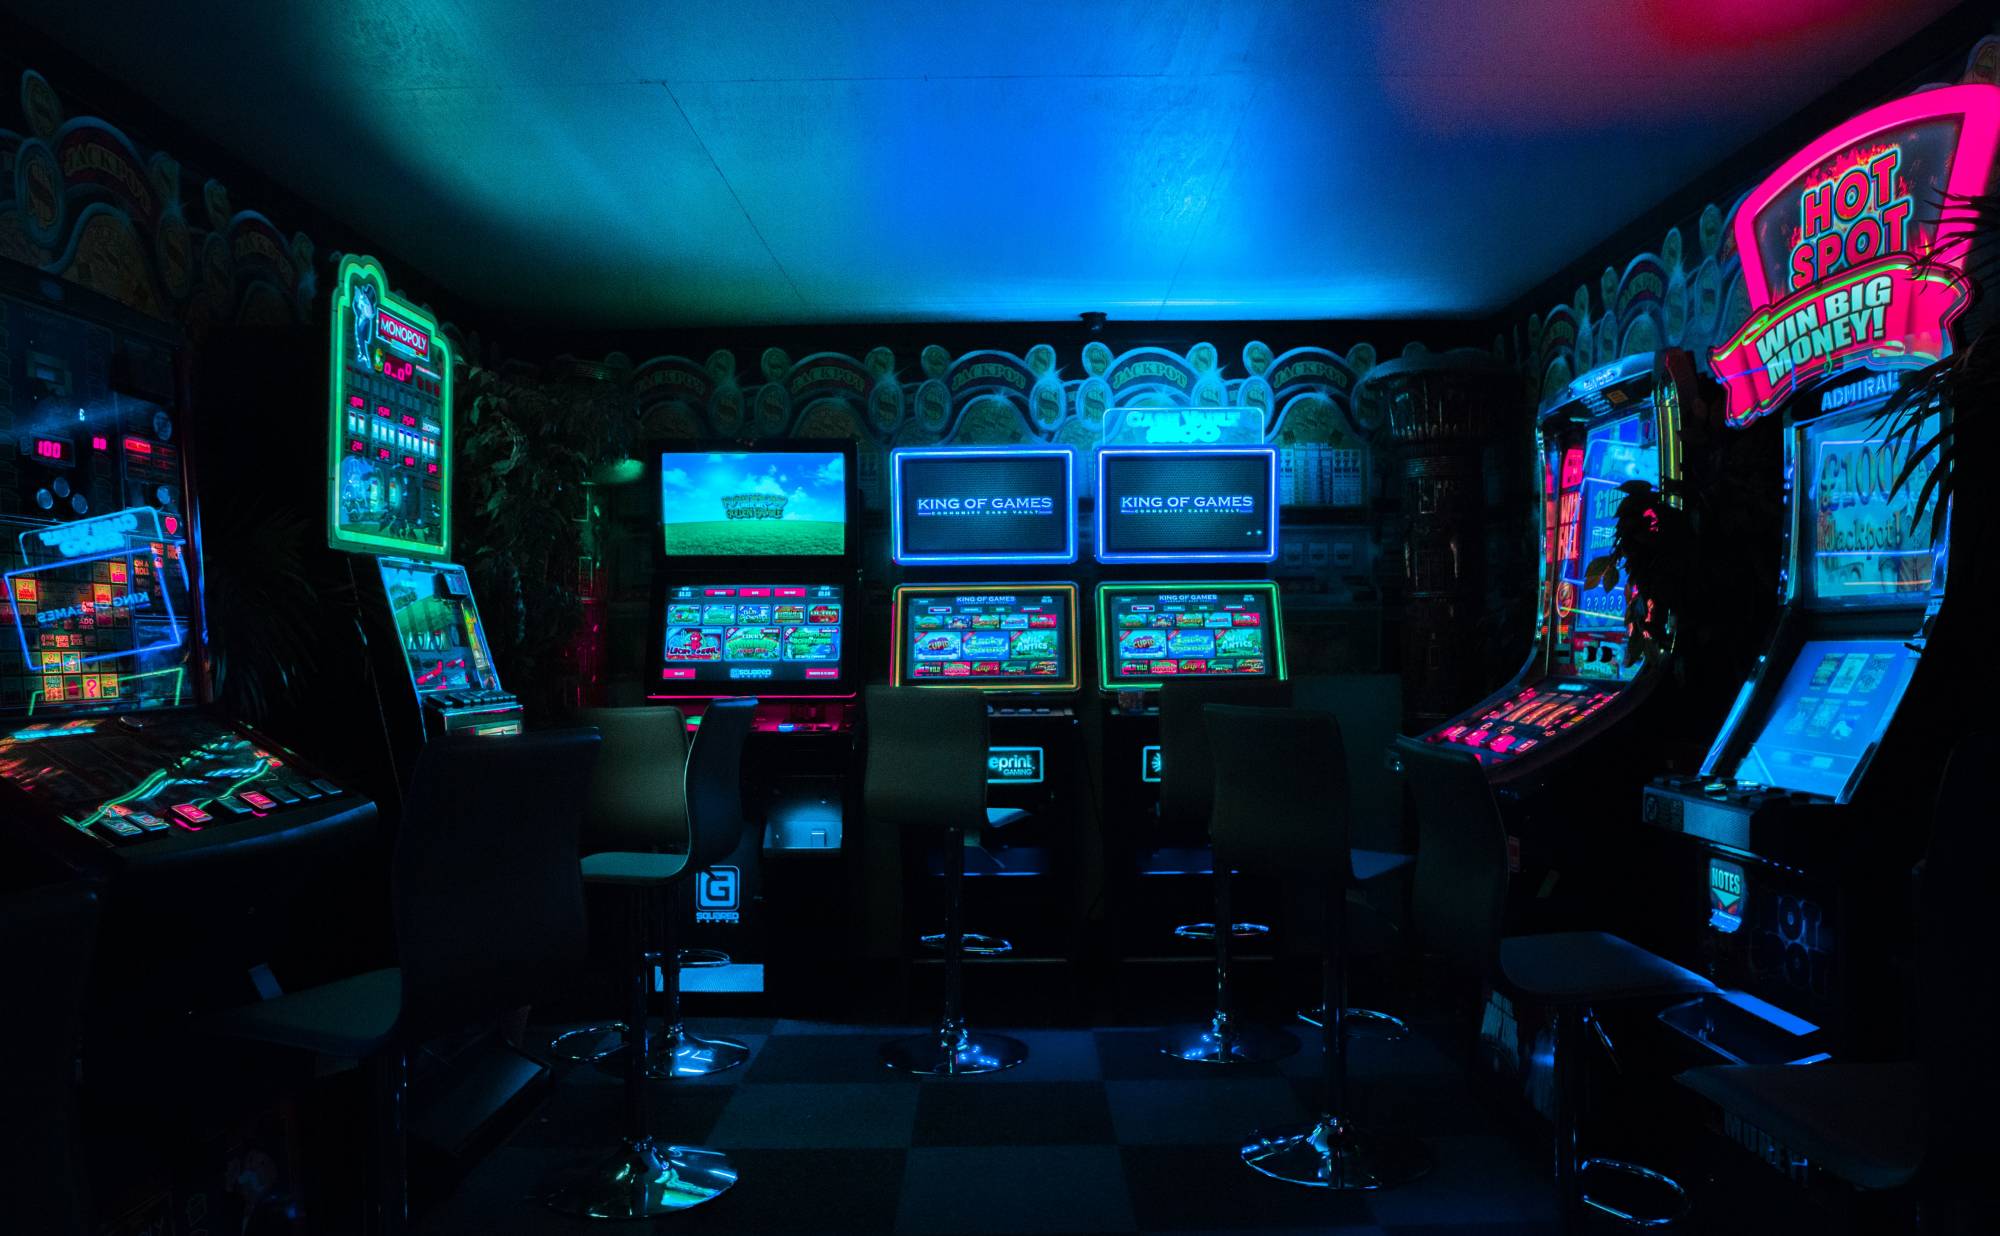 Arcade room